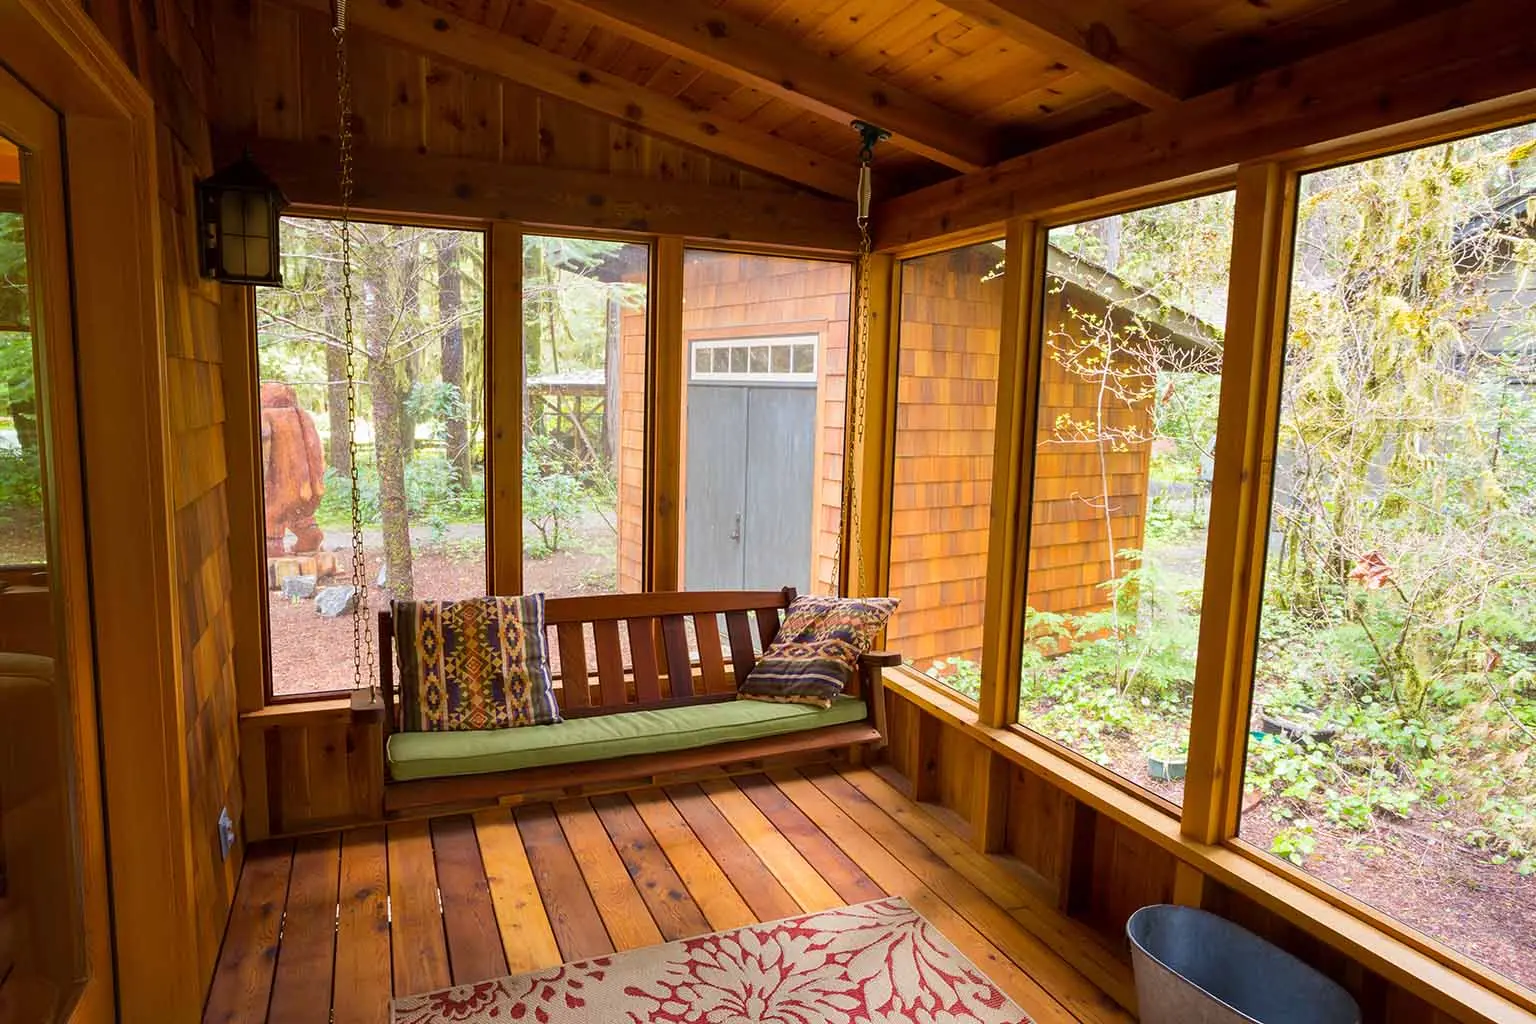 Sunroom with wood wall interior siding